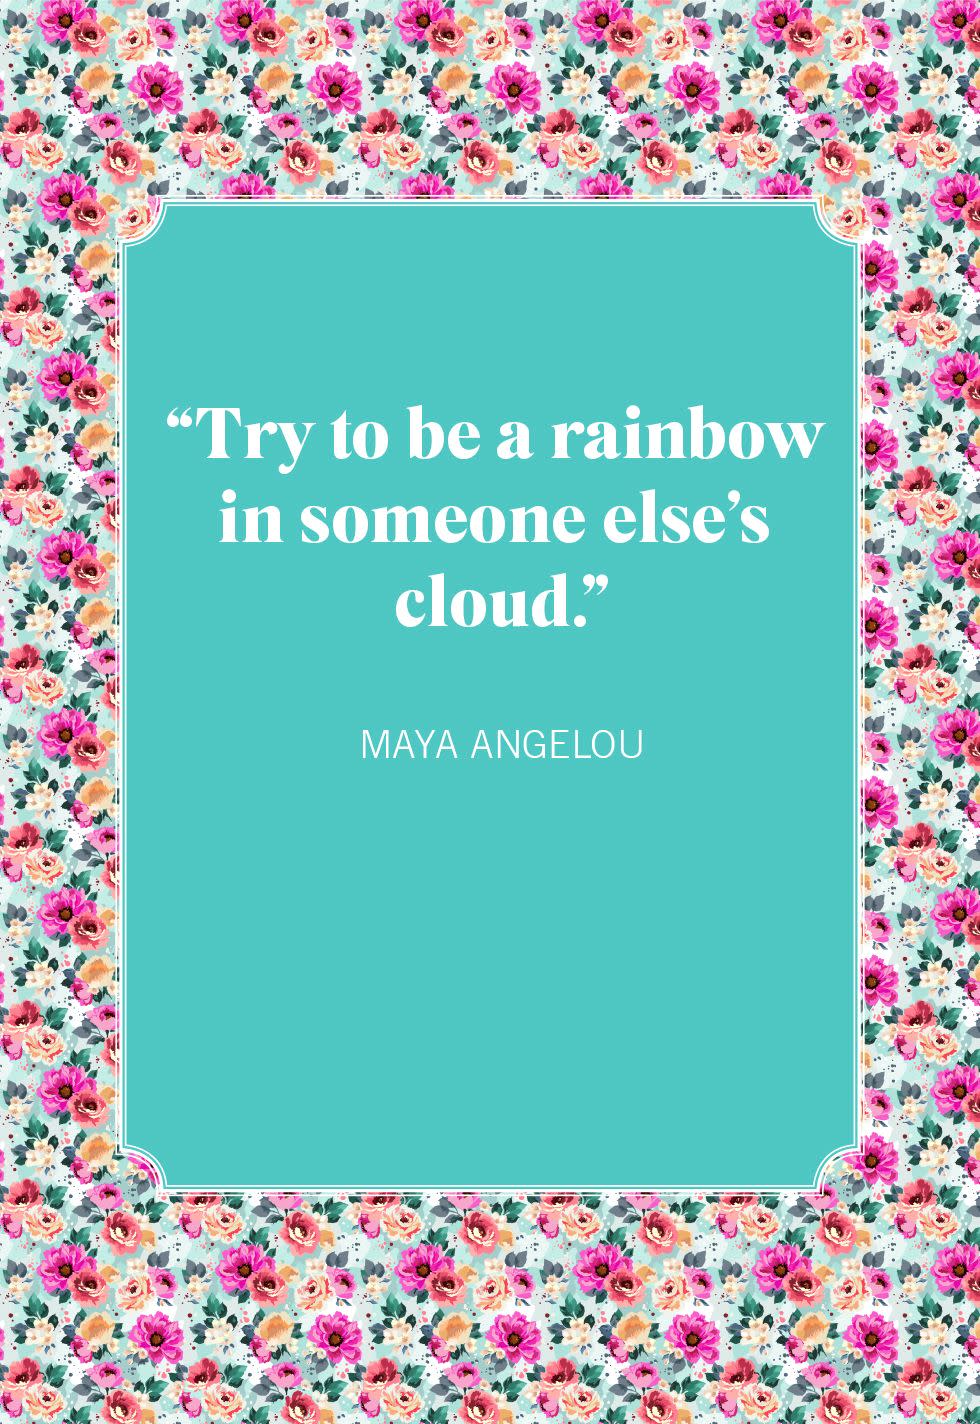 maya angelou short inspirational quotes